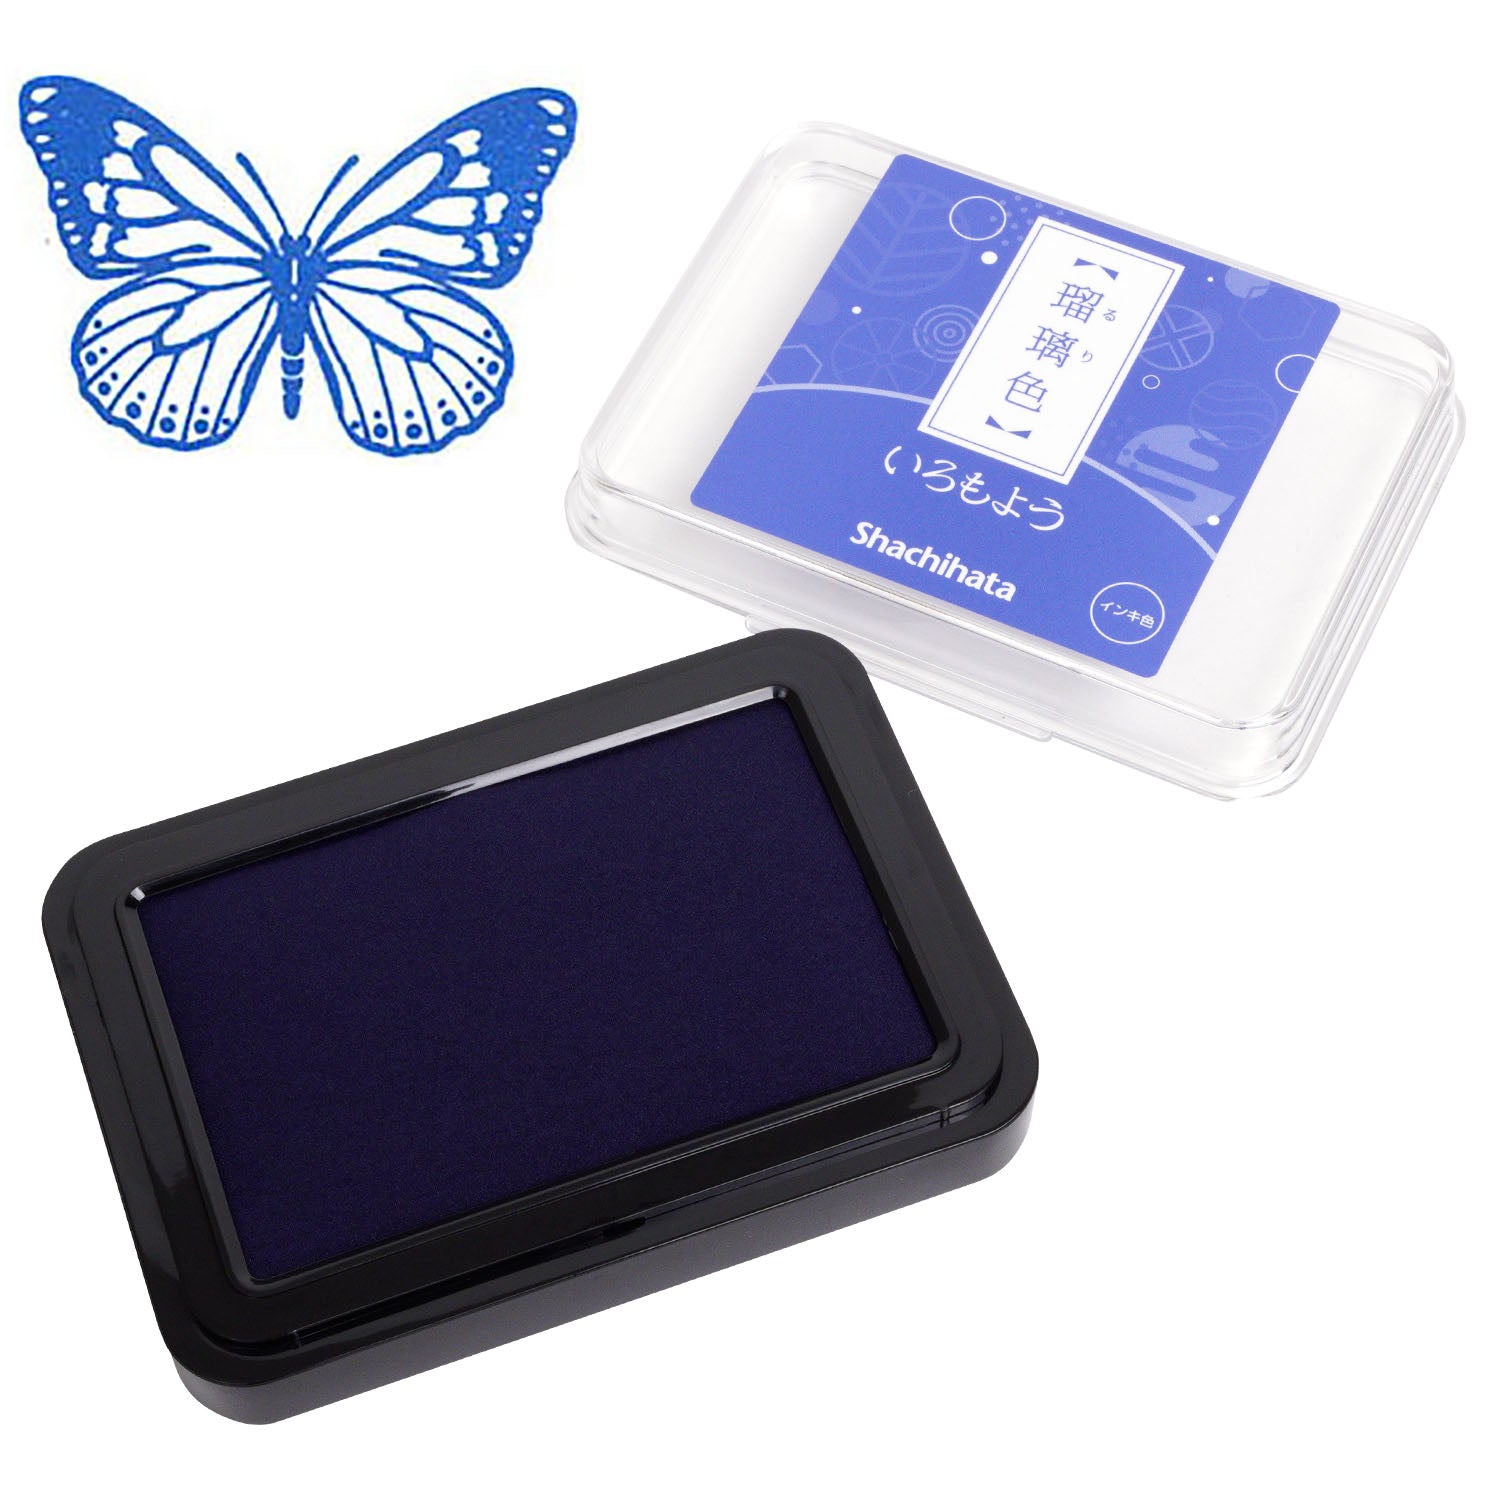 SHACHIHATA Iromoyou Stamp Pad HAC-1 Blue